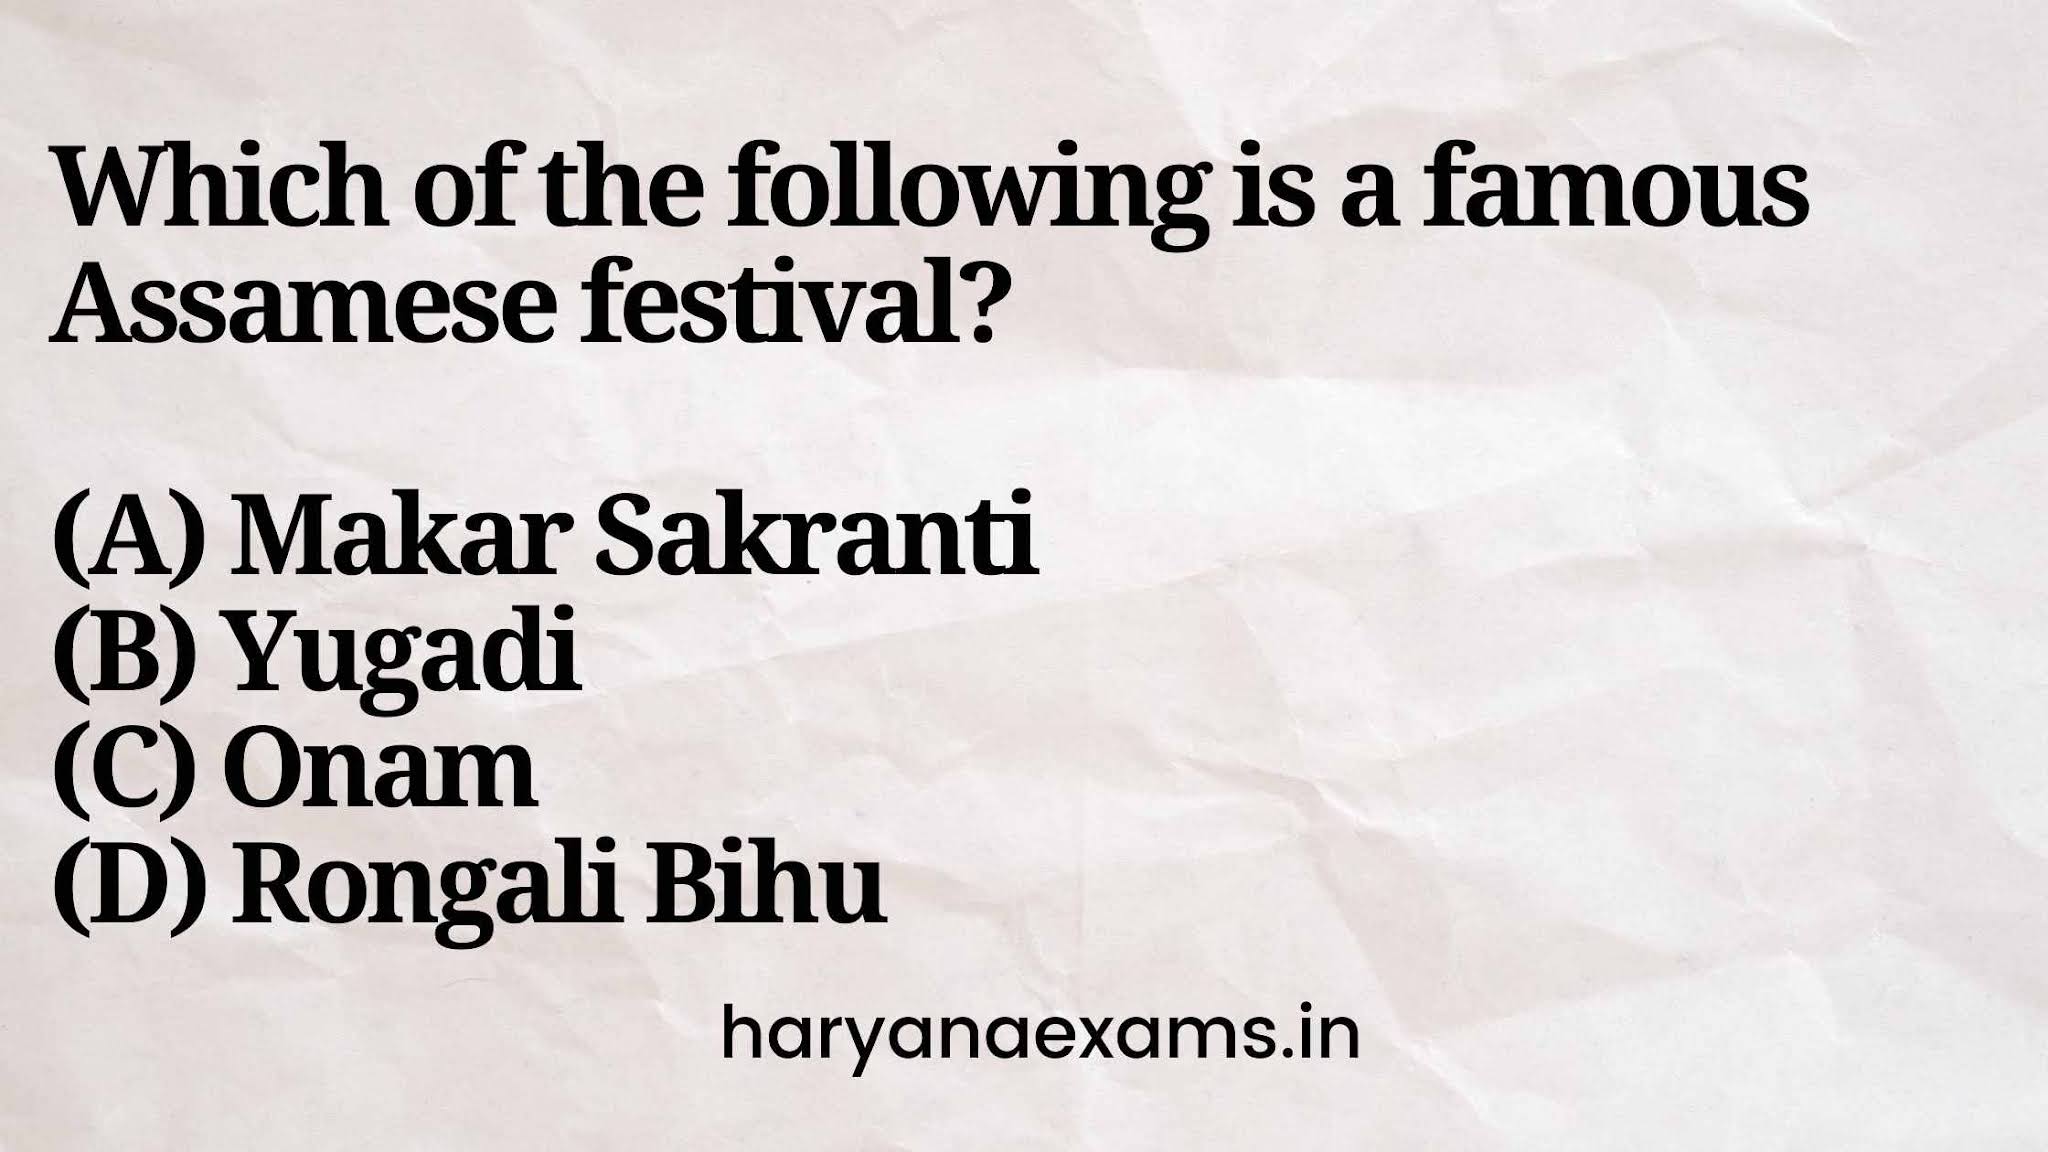 Which of the following is a famous Assamese festival? (A) Makar Sakranti (B) Yugadi (C) Onam (D) Rongali Bihu